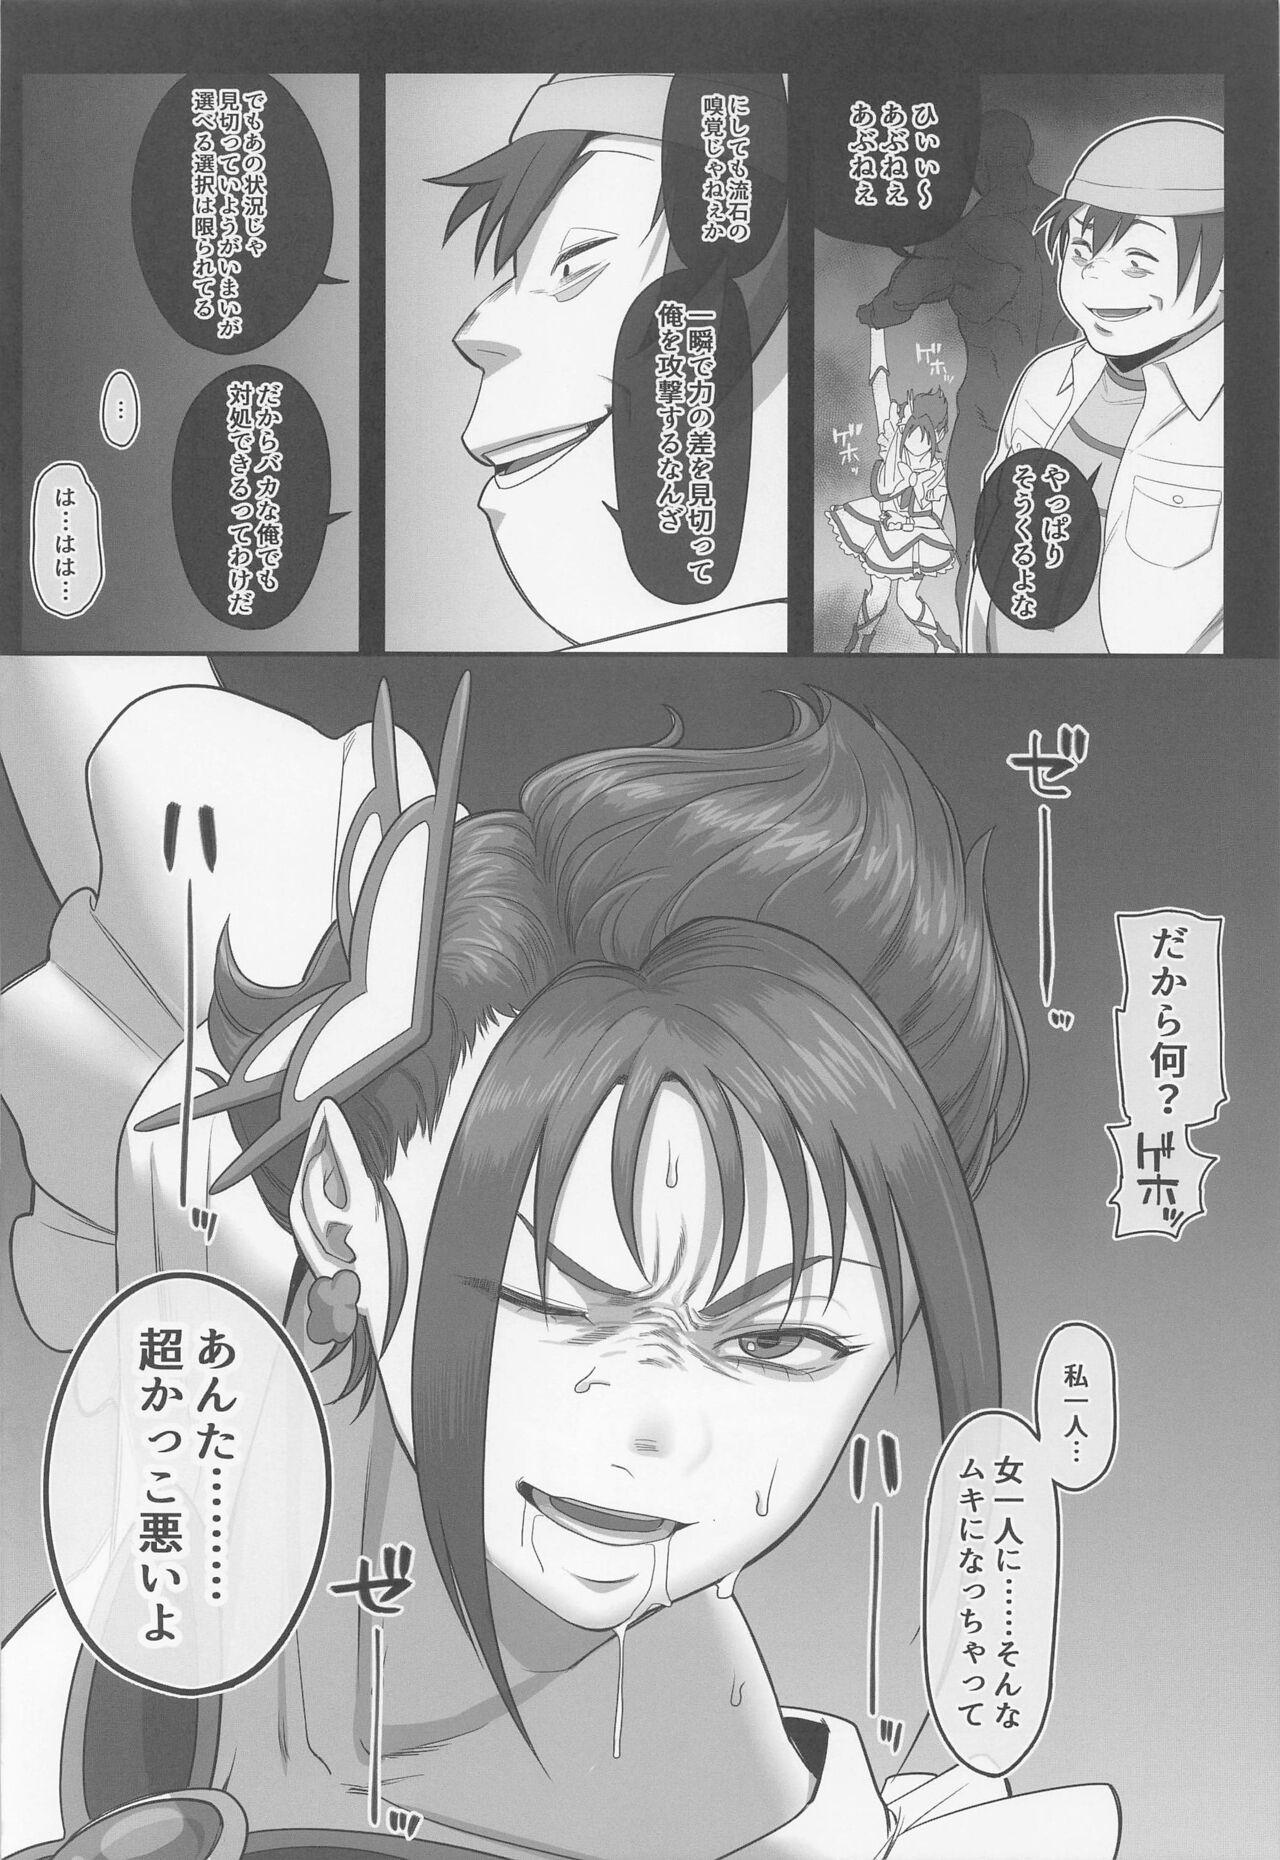 Femdom Precure no Rakujitsu 2 - Yes precure 5 Wank - Page 11